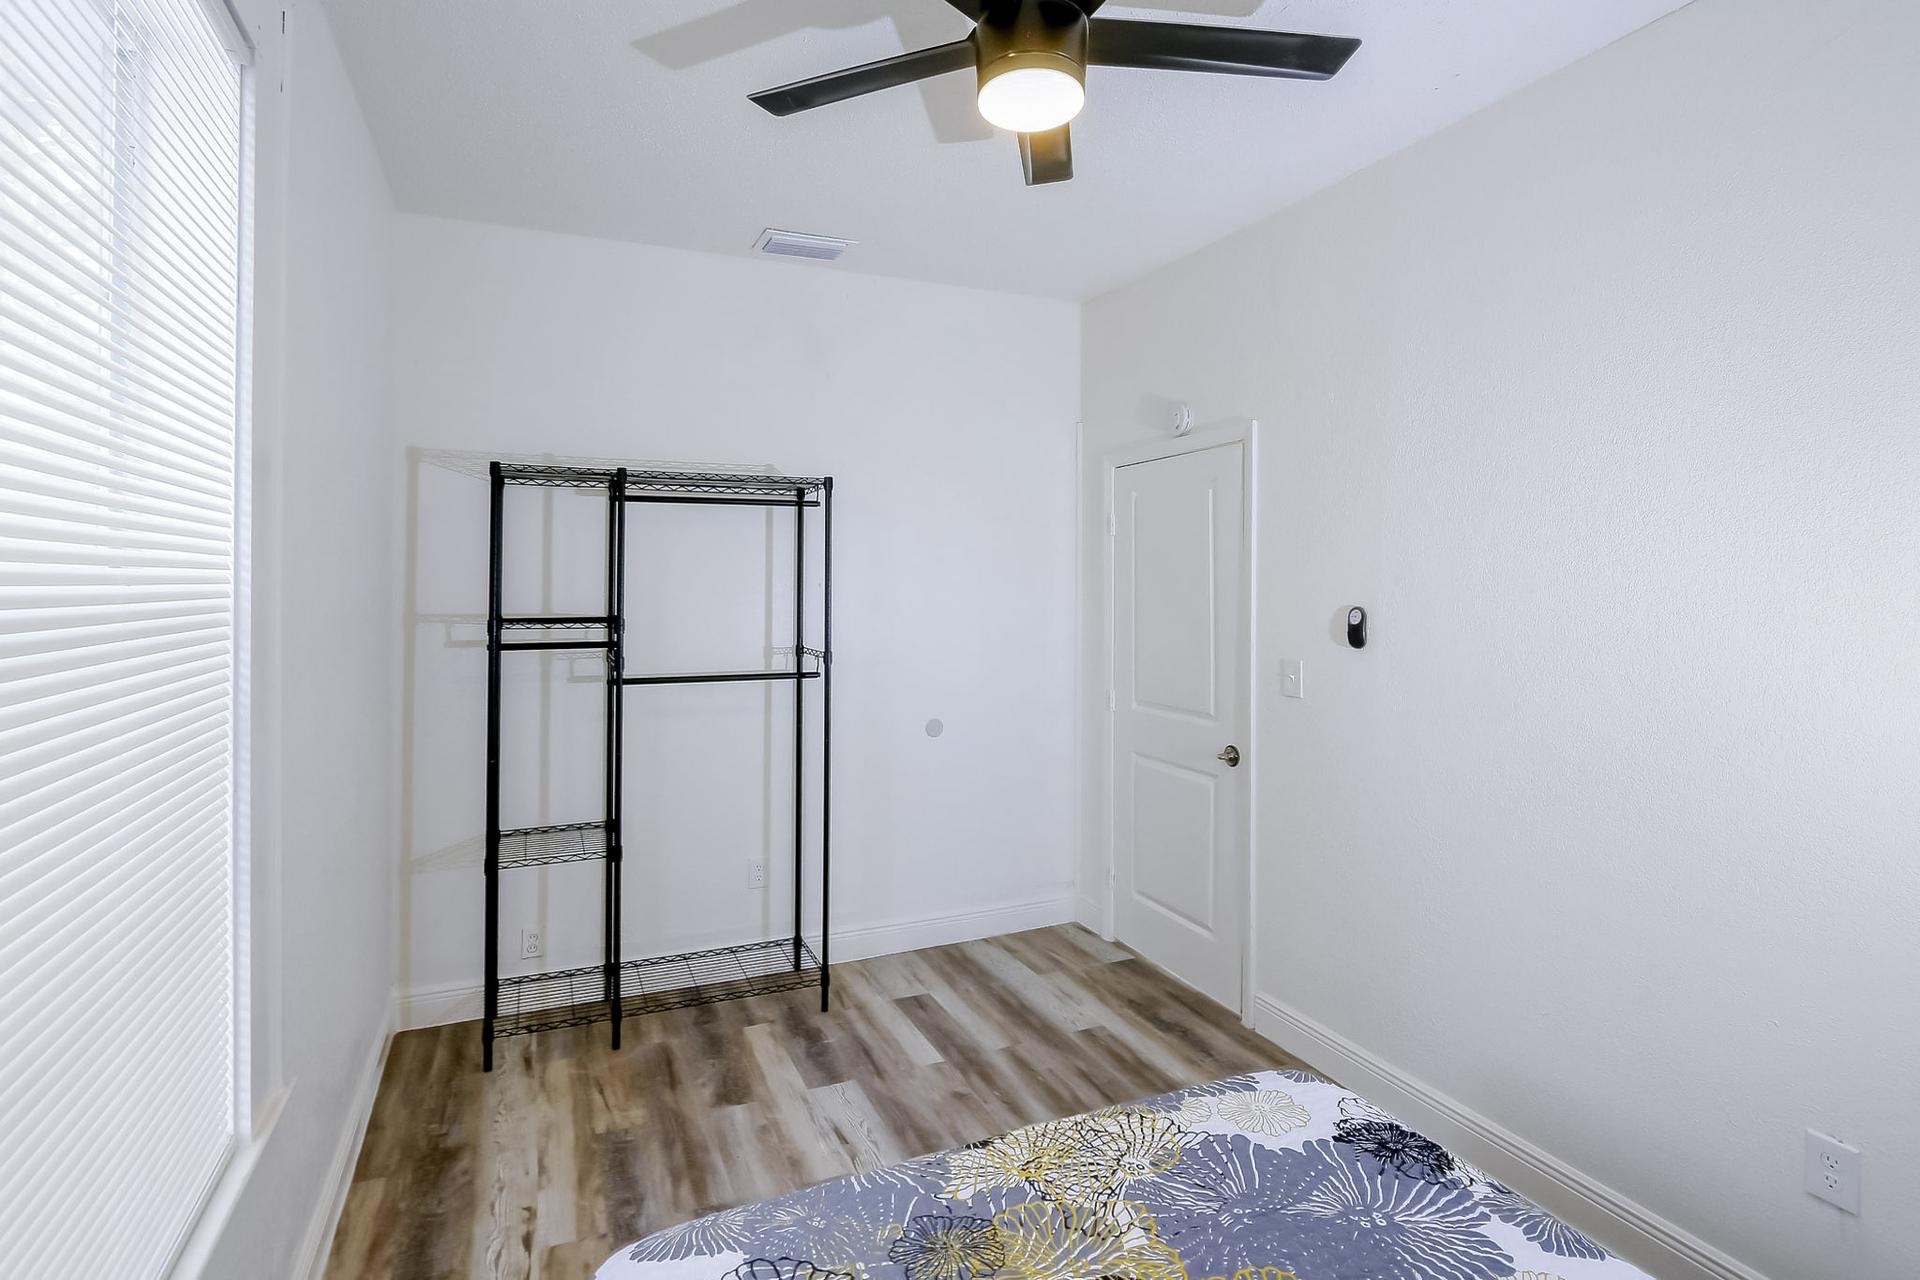 bedroom, detected:ceiling fan